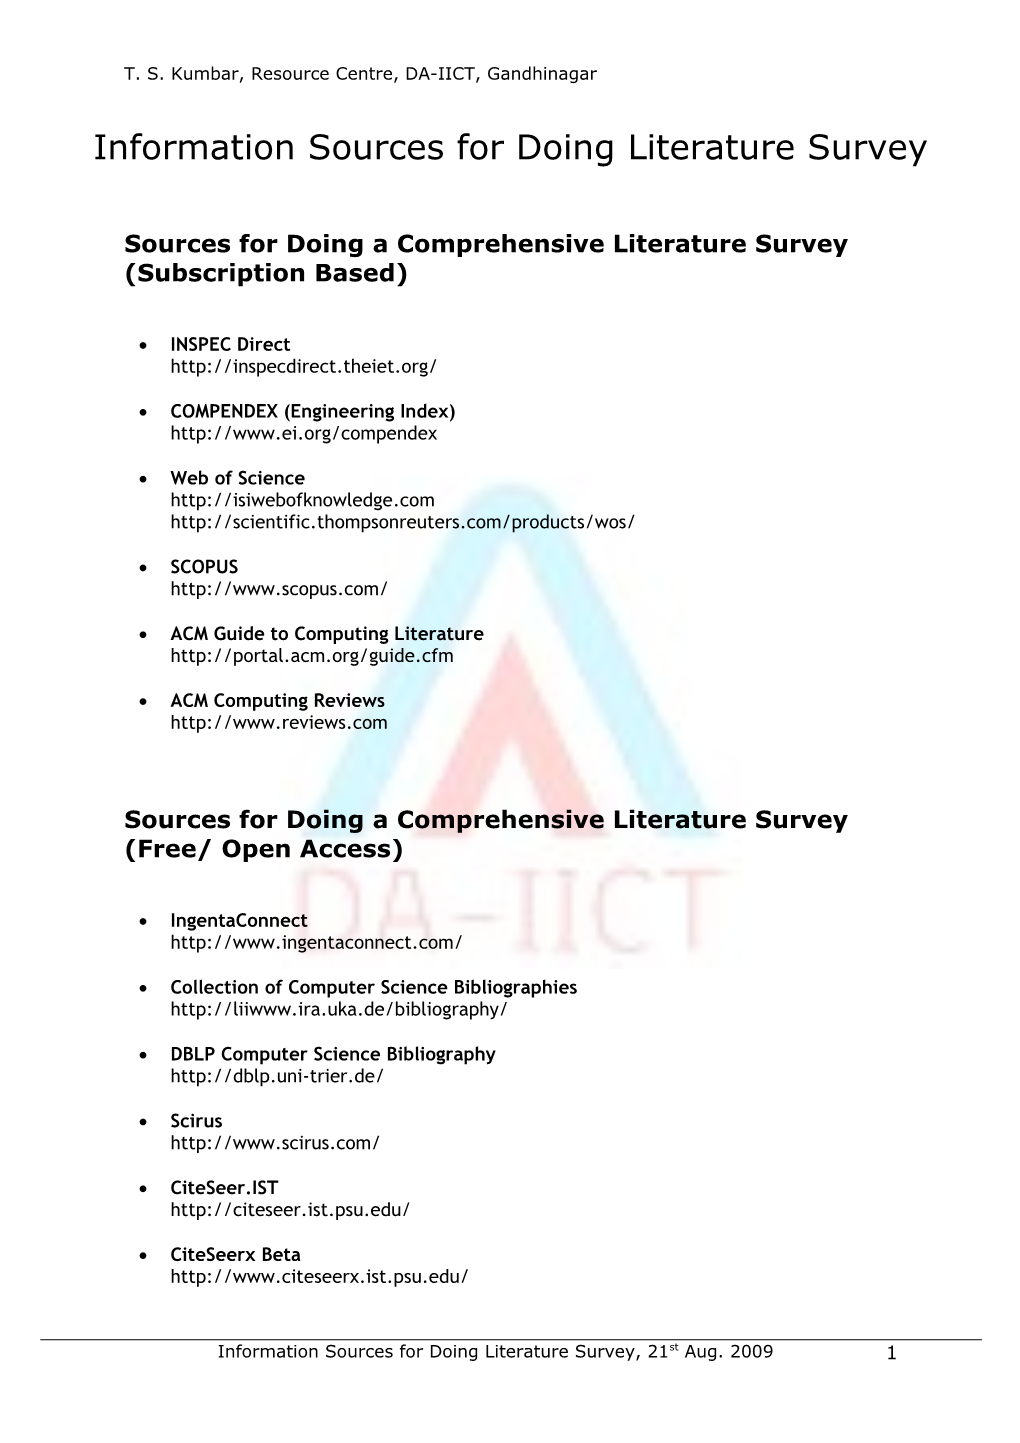 Sources for Doing a Comprehensive Literature Survey (Subscription Based)